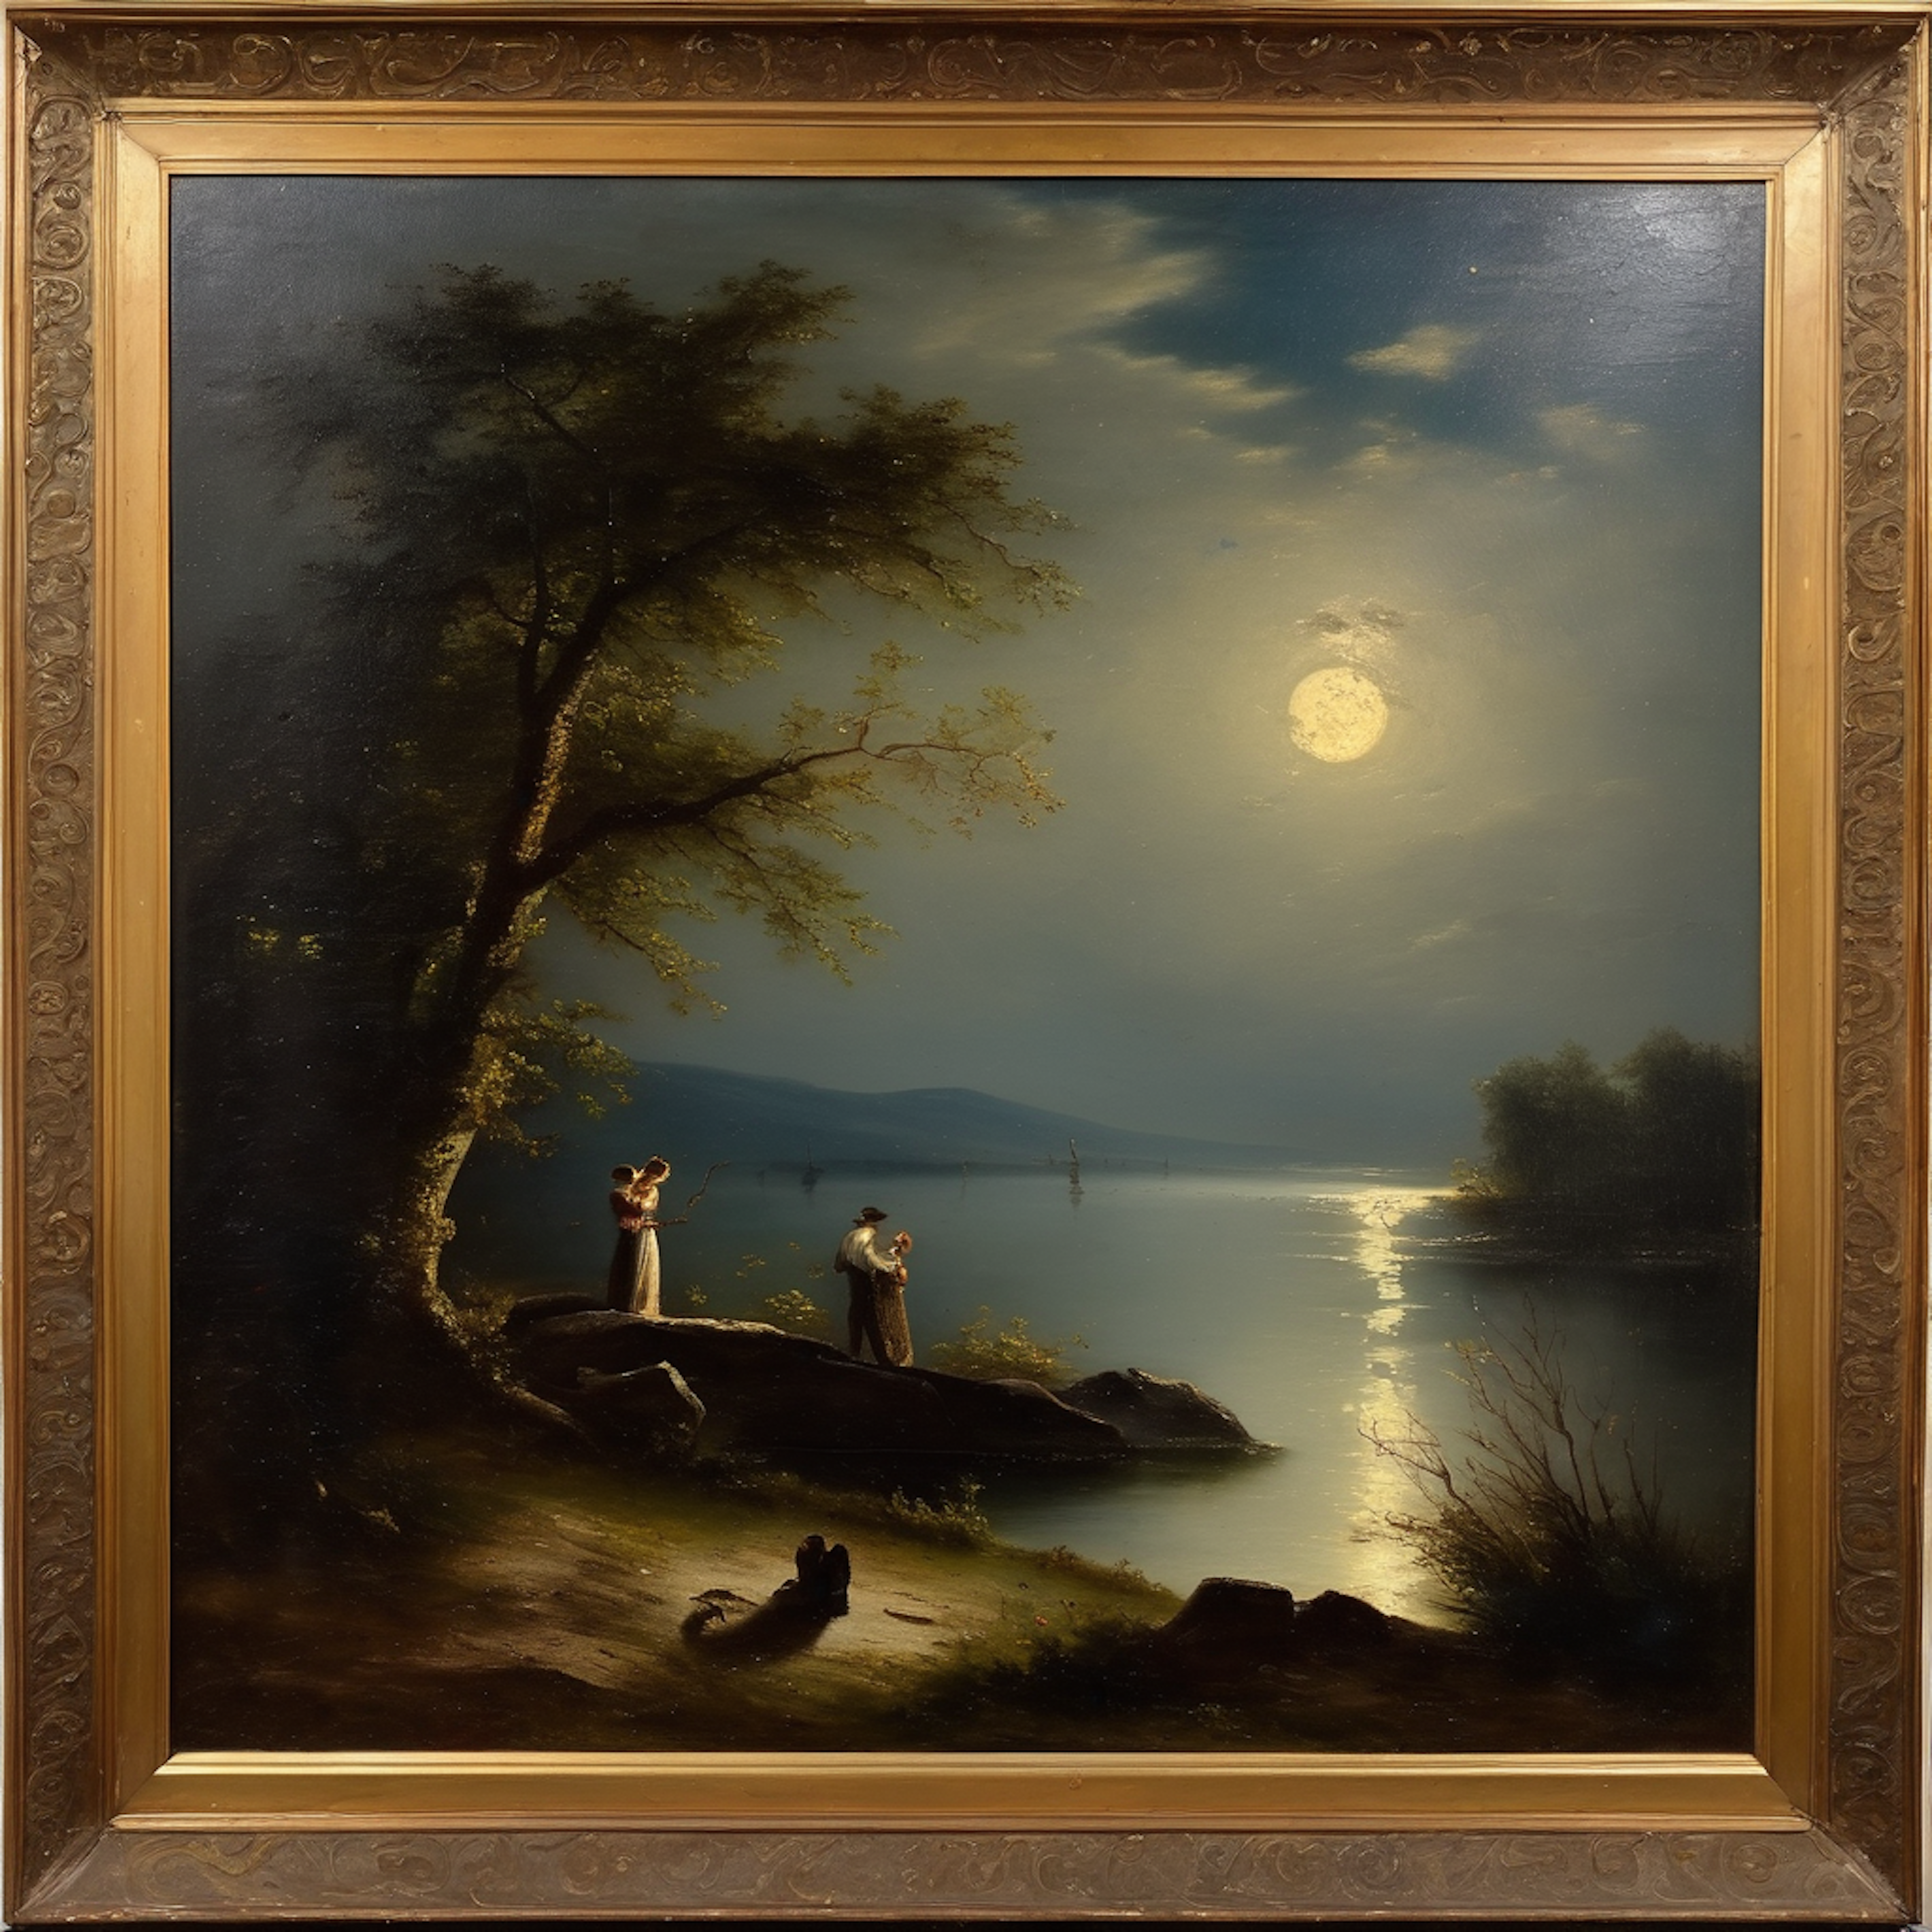 "Moonlit Scene" in style of Renaissance